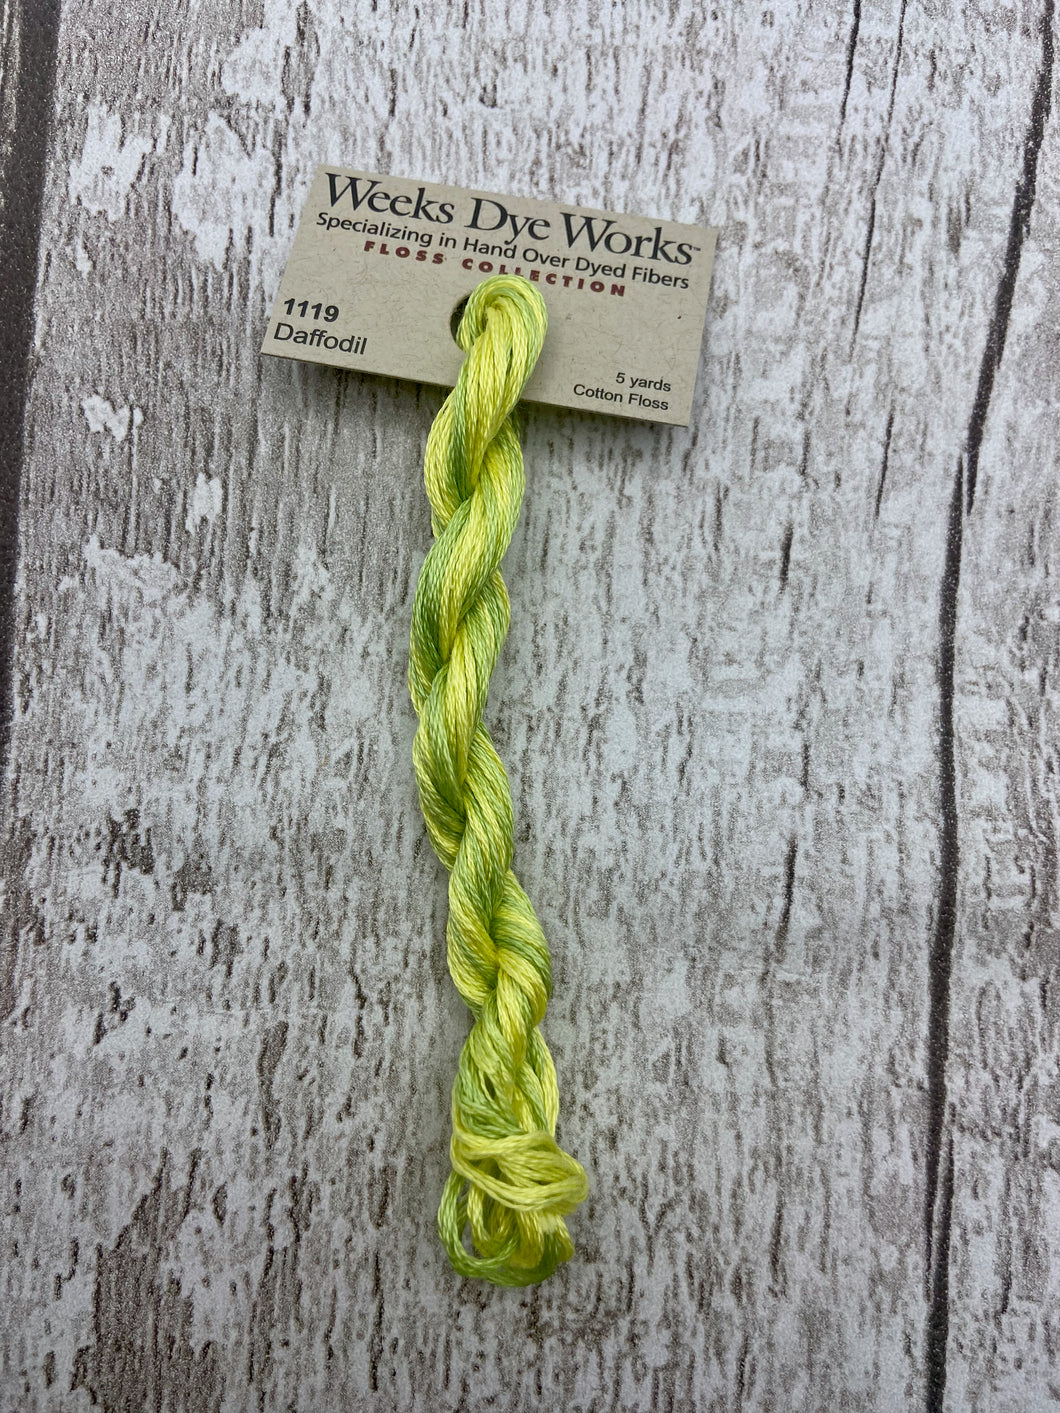 Daffodil (#1119) Weeks Dye Works 6-strand cotton floss